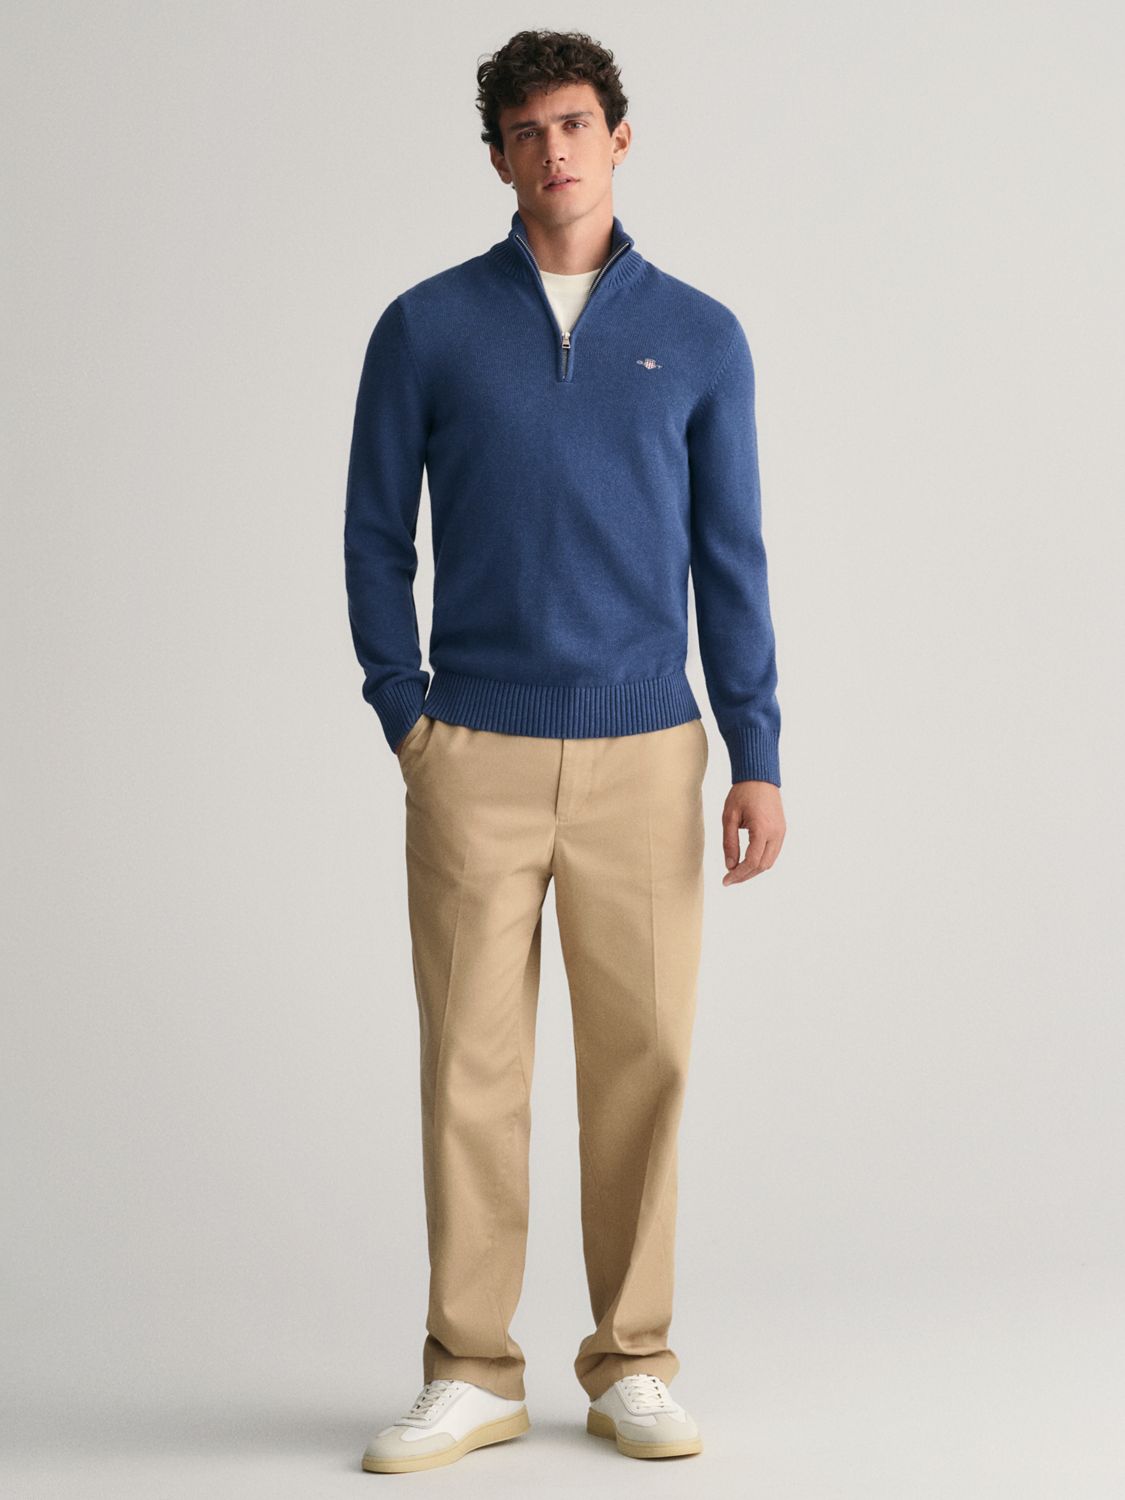 GANT Cotton Half Zip Collar Jumper, Evening Blue at John Lewis & Partners